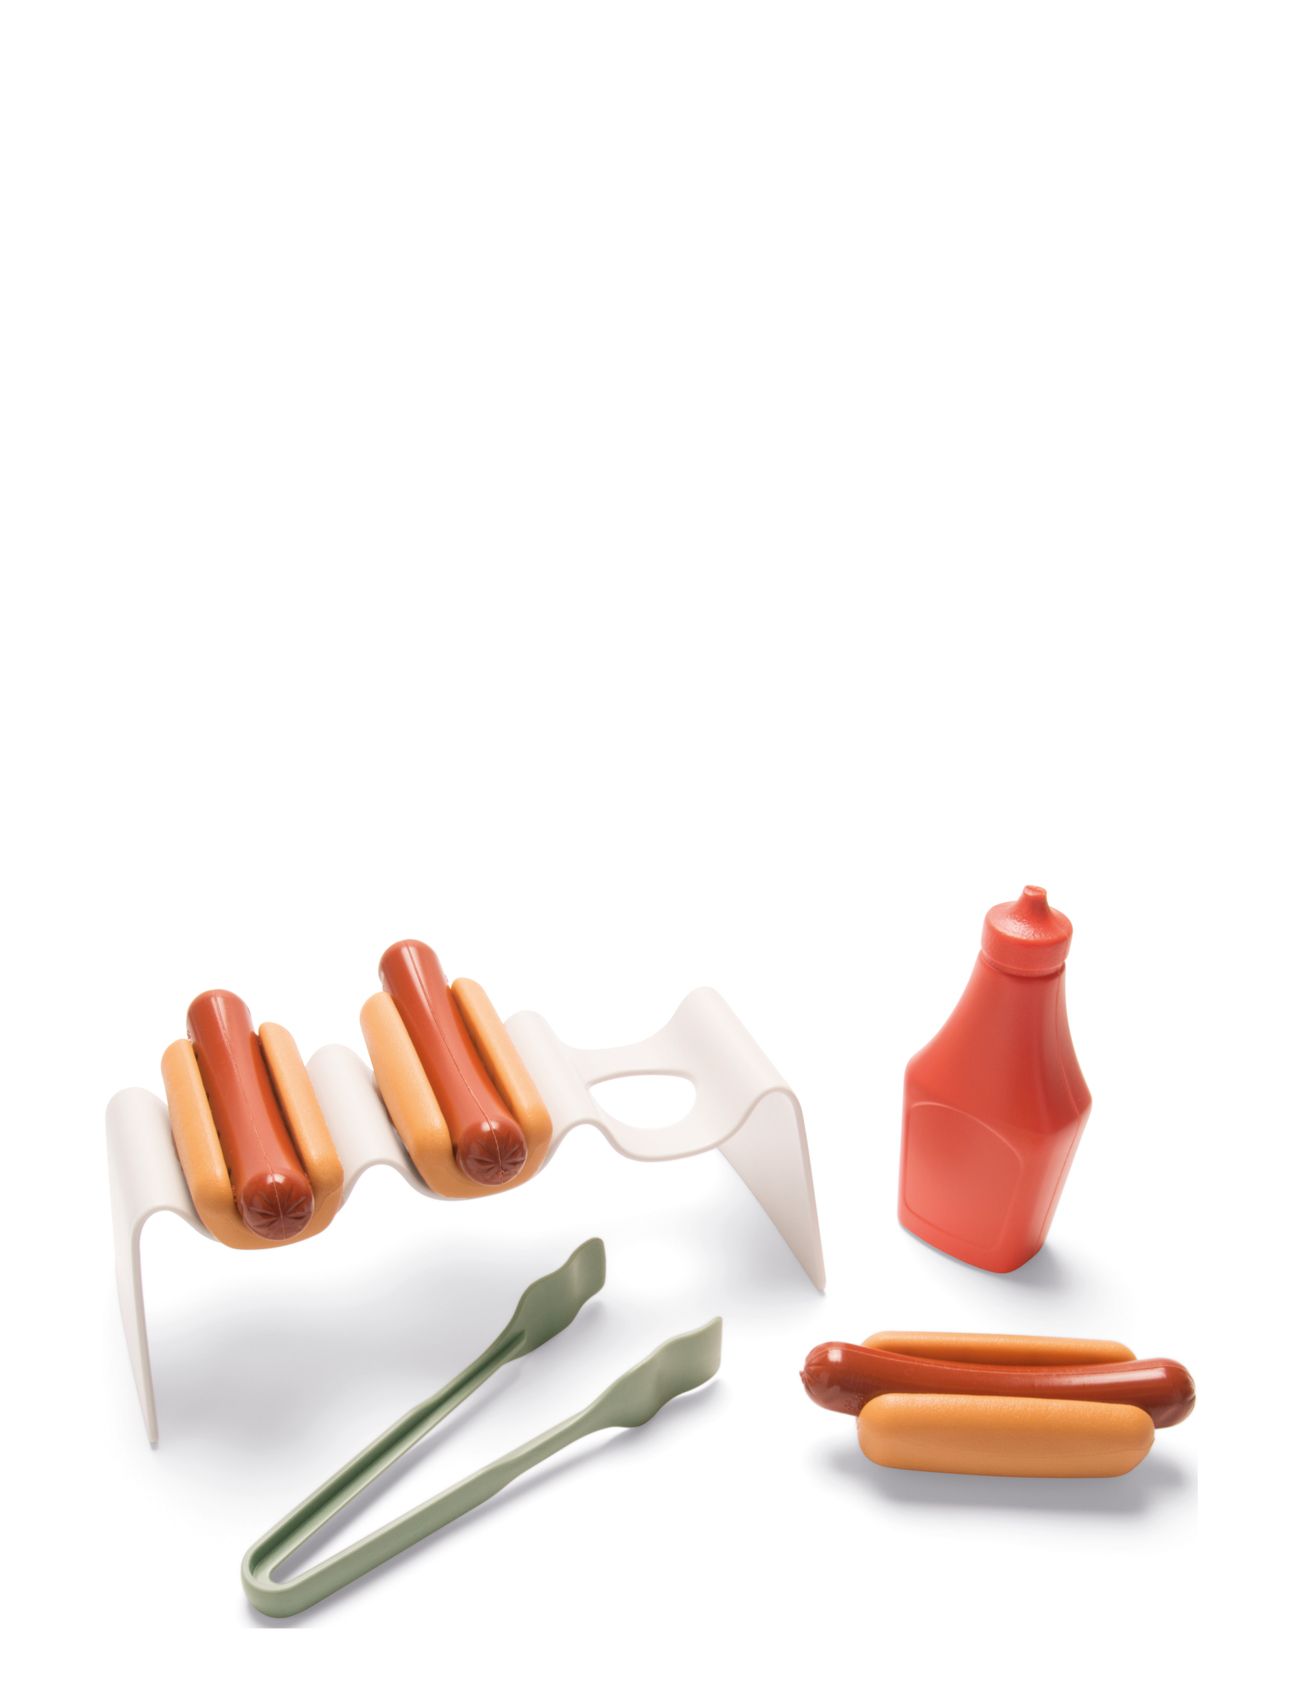 Dantoy Green Garden Hotdog Set In Box Toys Toy Kitchen & Accessories Toy Food & Cakes Multi/mønstret Dantoy